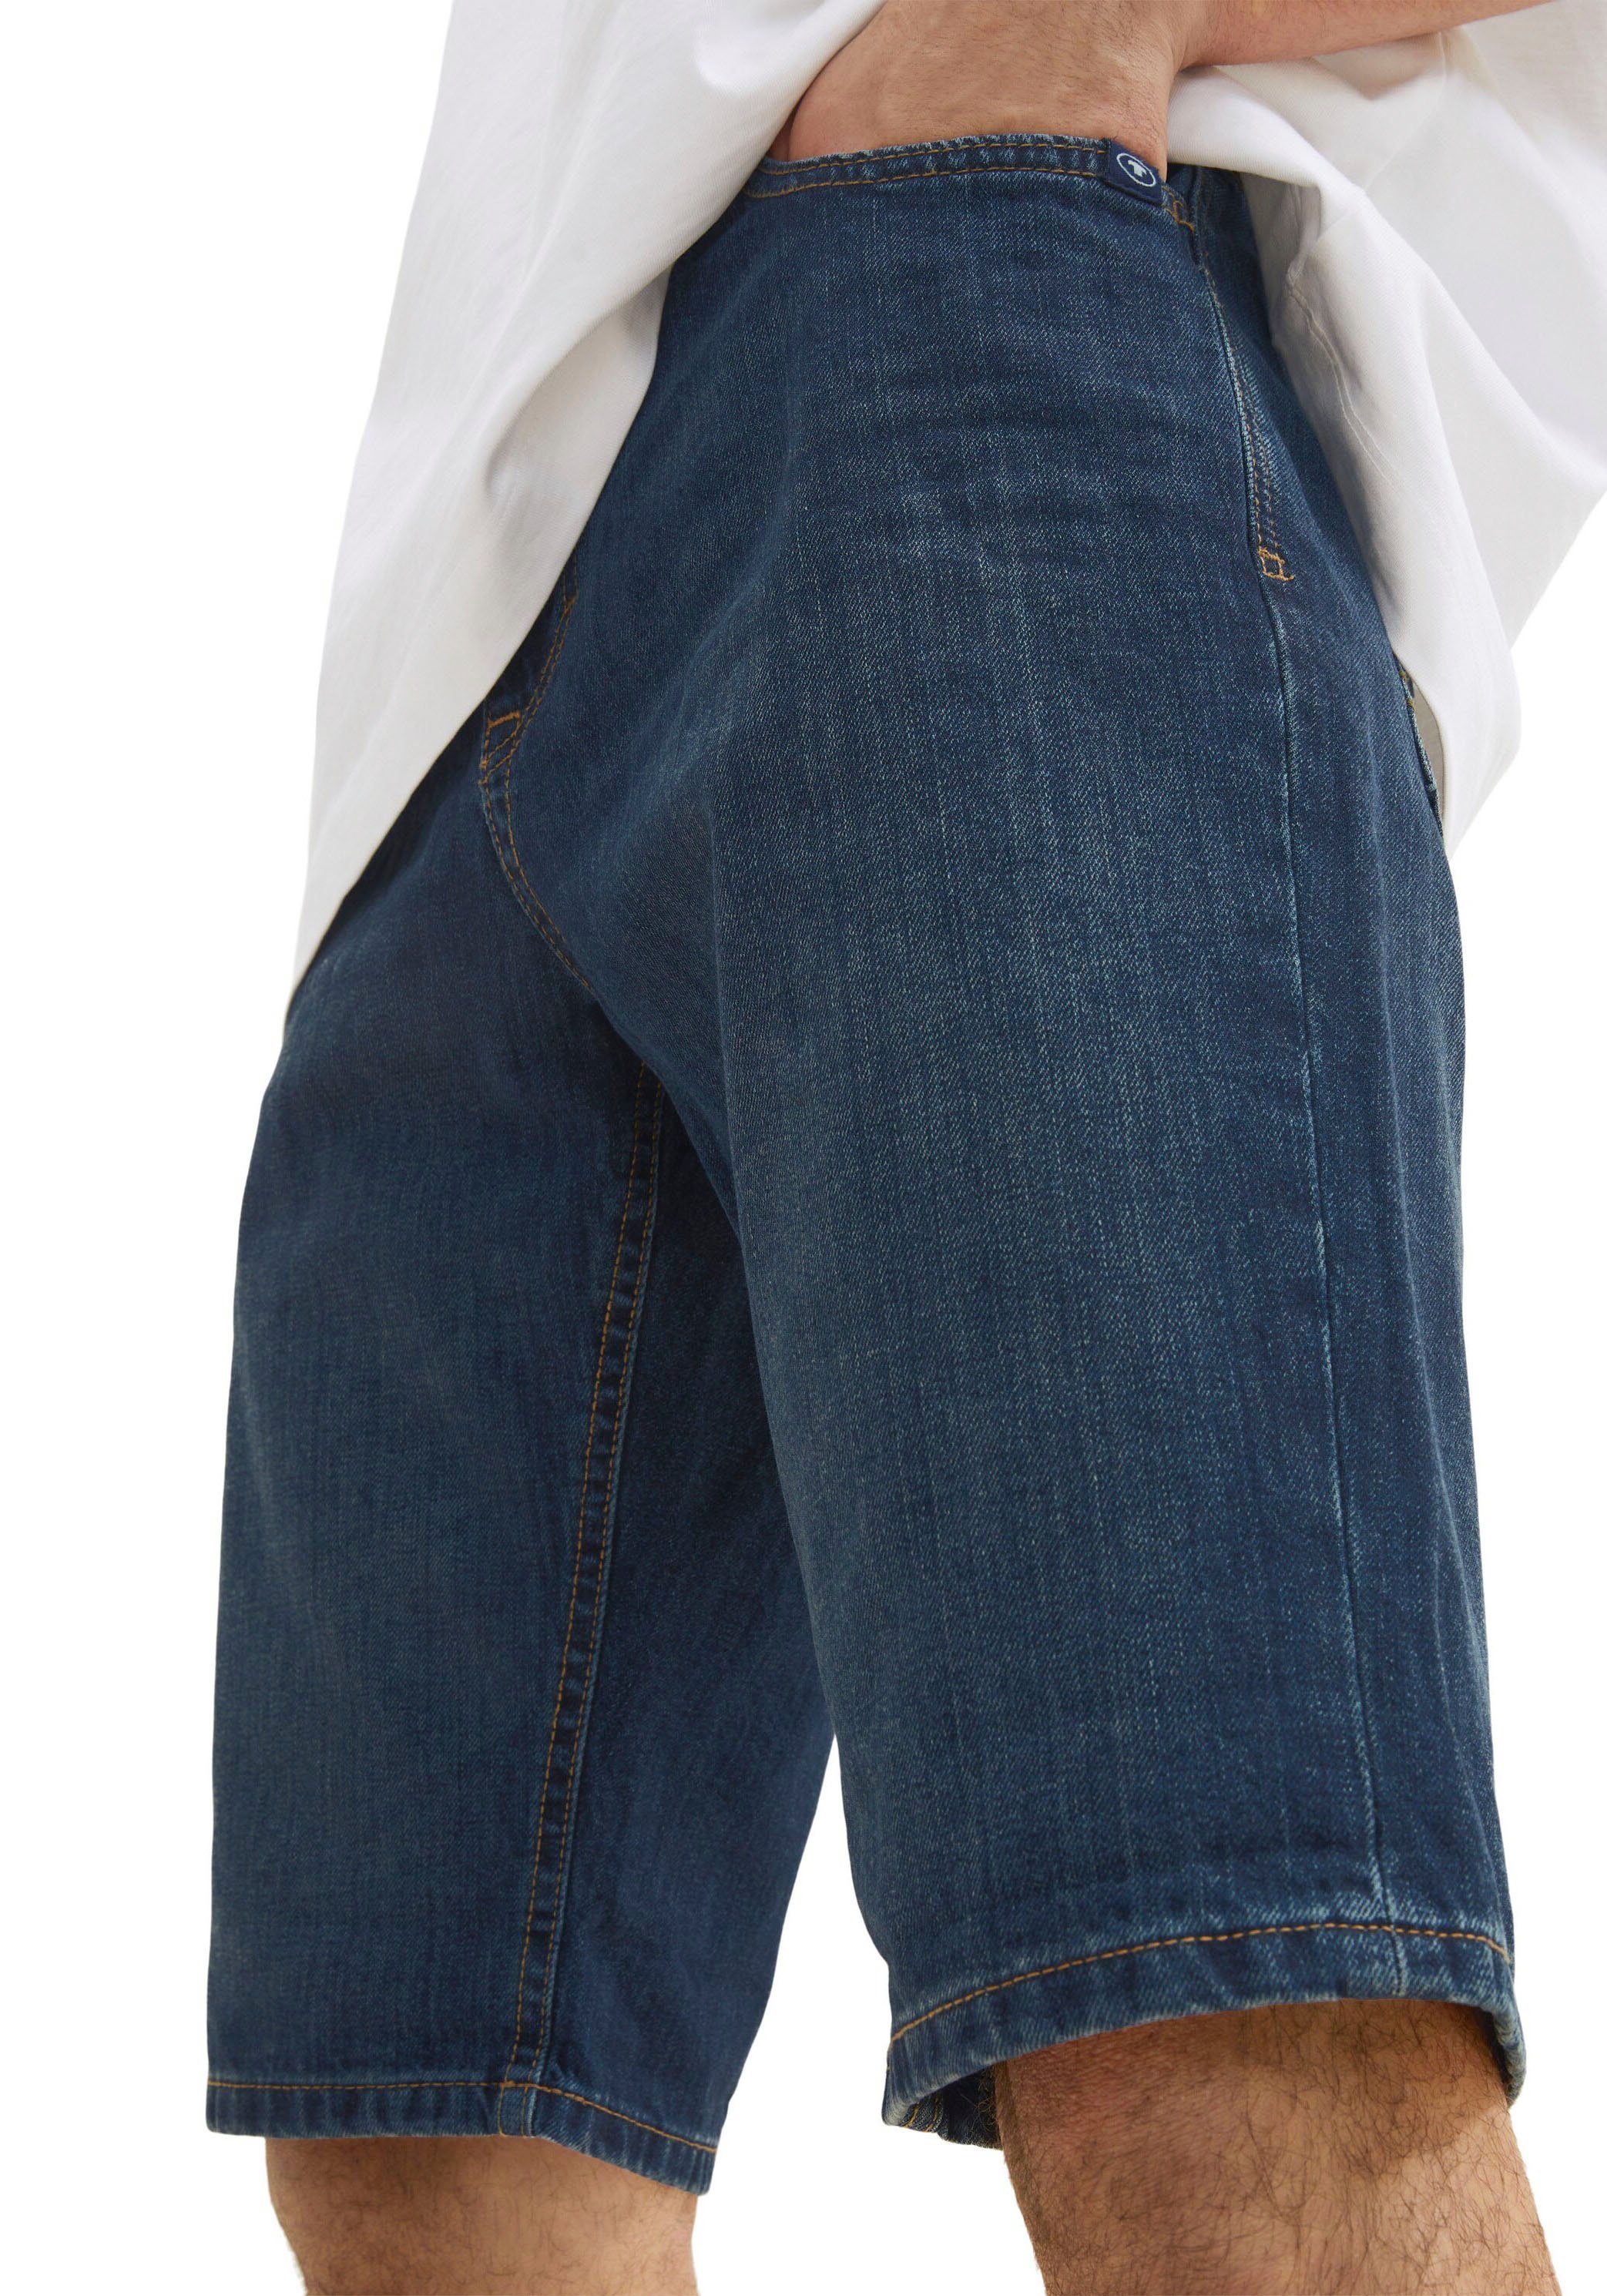 Form Jeansshorts in blue Josh 5-Pocket TAILOR tinted TOM